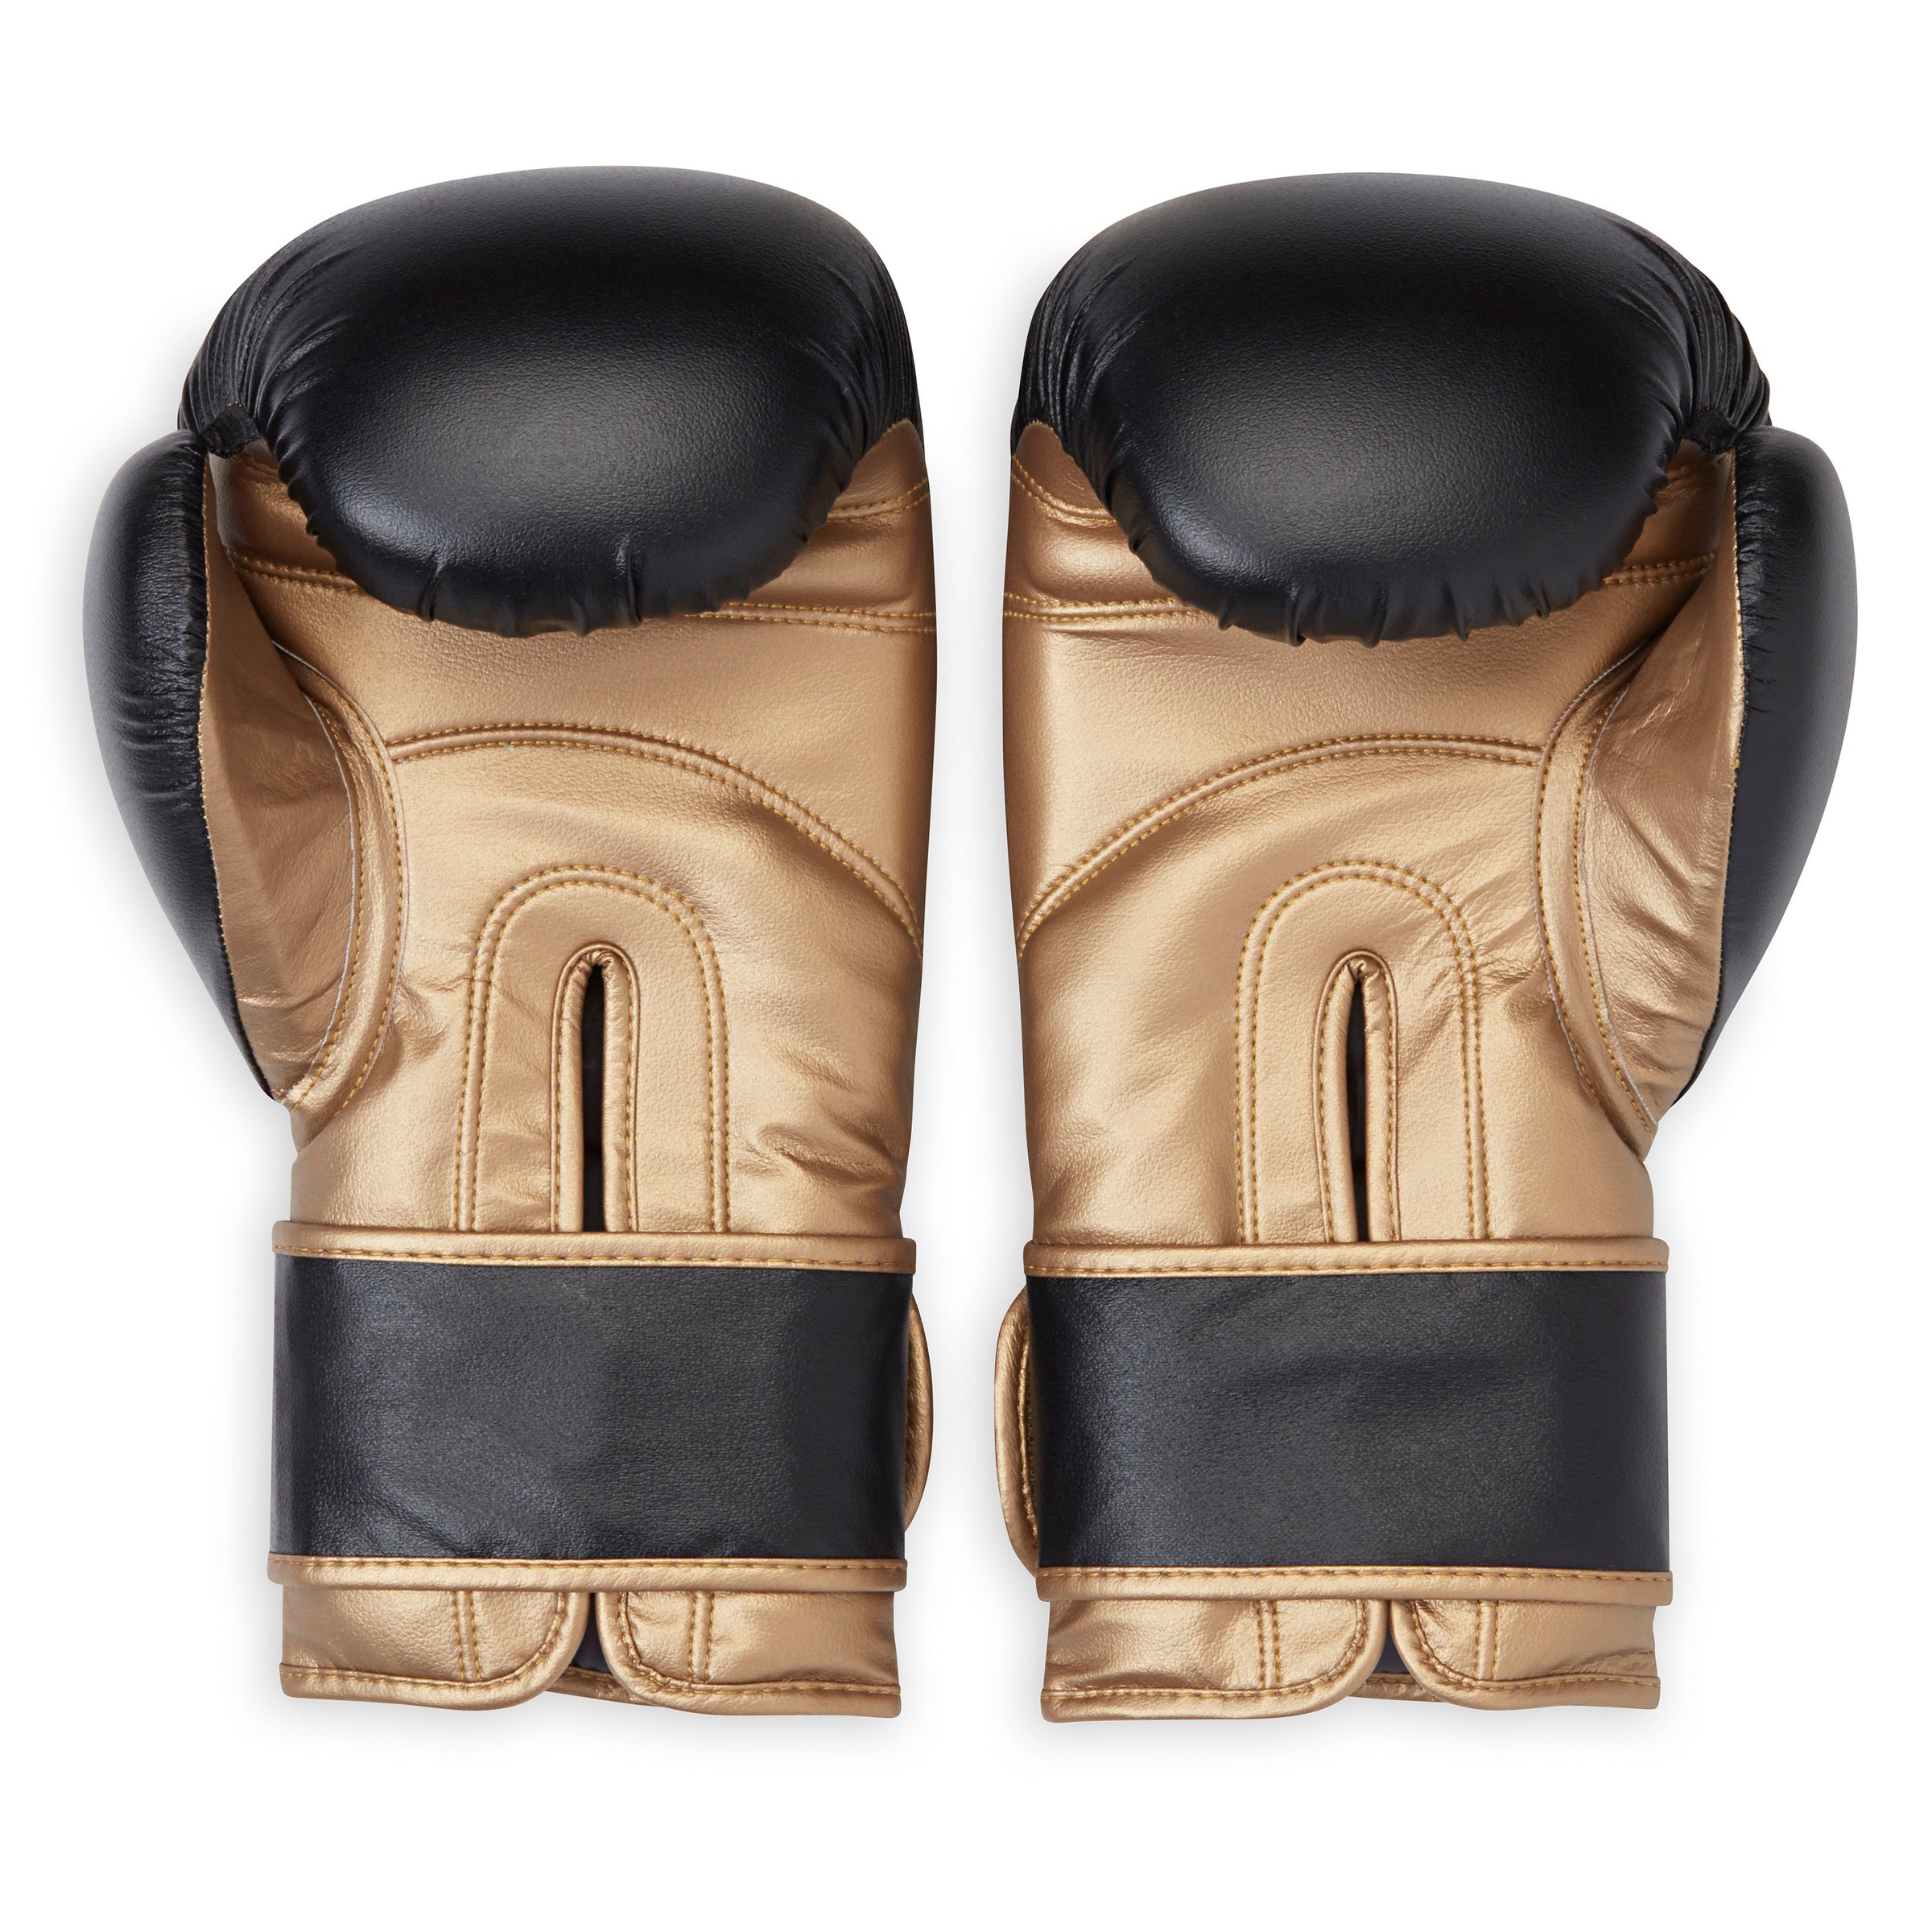 Venum Challenger 2.0 Boxing Gloves - 14 oz - Black 